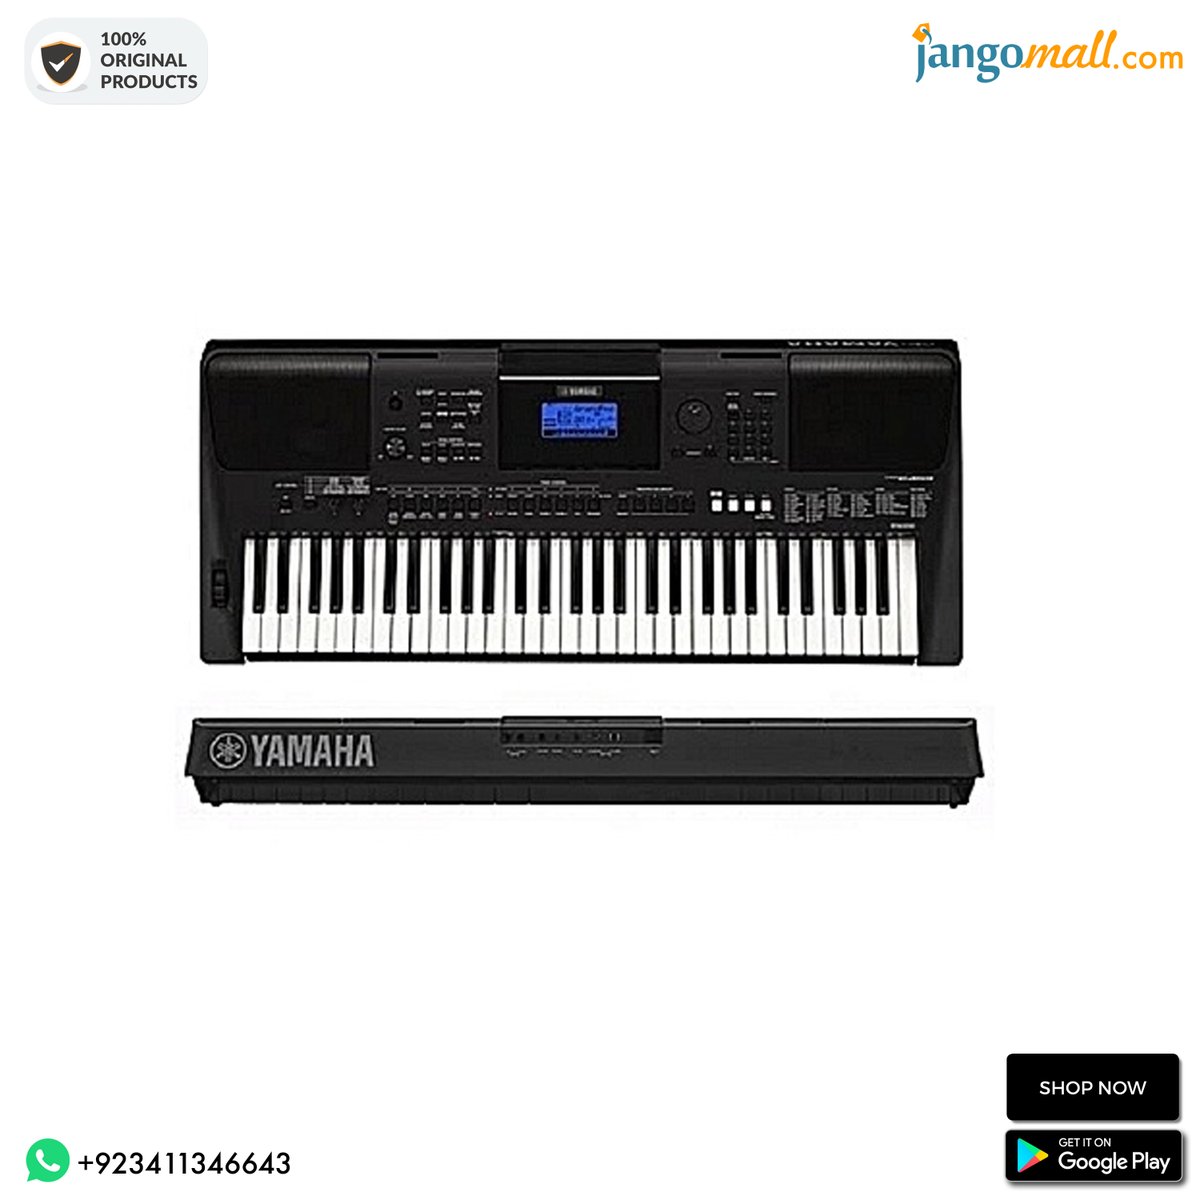 🎼 Yamaha PSR-E463 Electronic Keyboard #Jangomall 🎼
🌟 1 Year Official Warranty
🚗 Same Day Lahore Delivery 🚗
🎹 235 auto accompaniment Styles 
🔥 Best Price
🌎bit.ly/3e8mLMq
#Jangomall #brand #Yamaha #keyboard #electrickeyboard #music #musicislife #bestprice #Pakistan